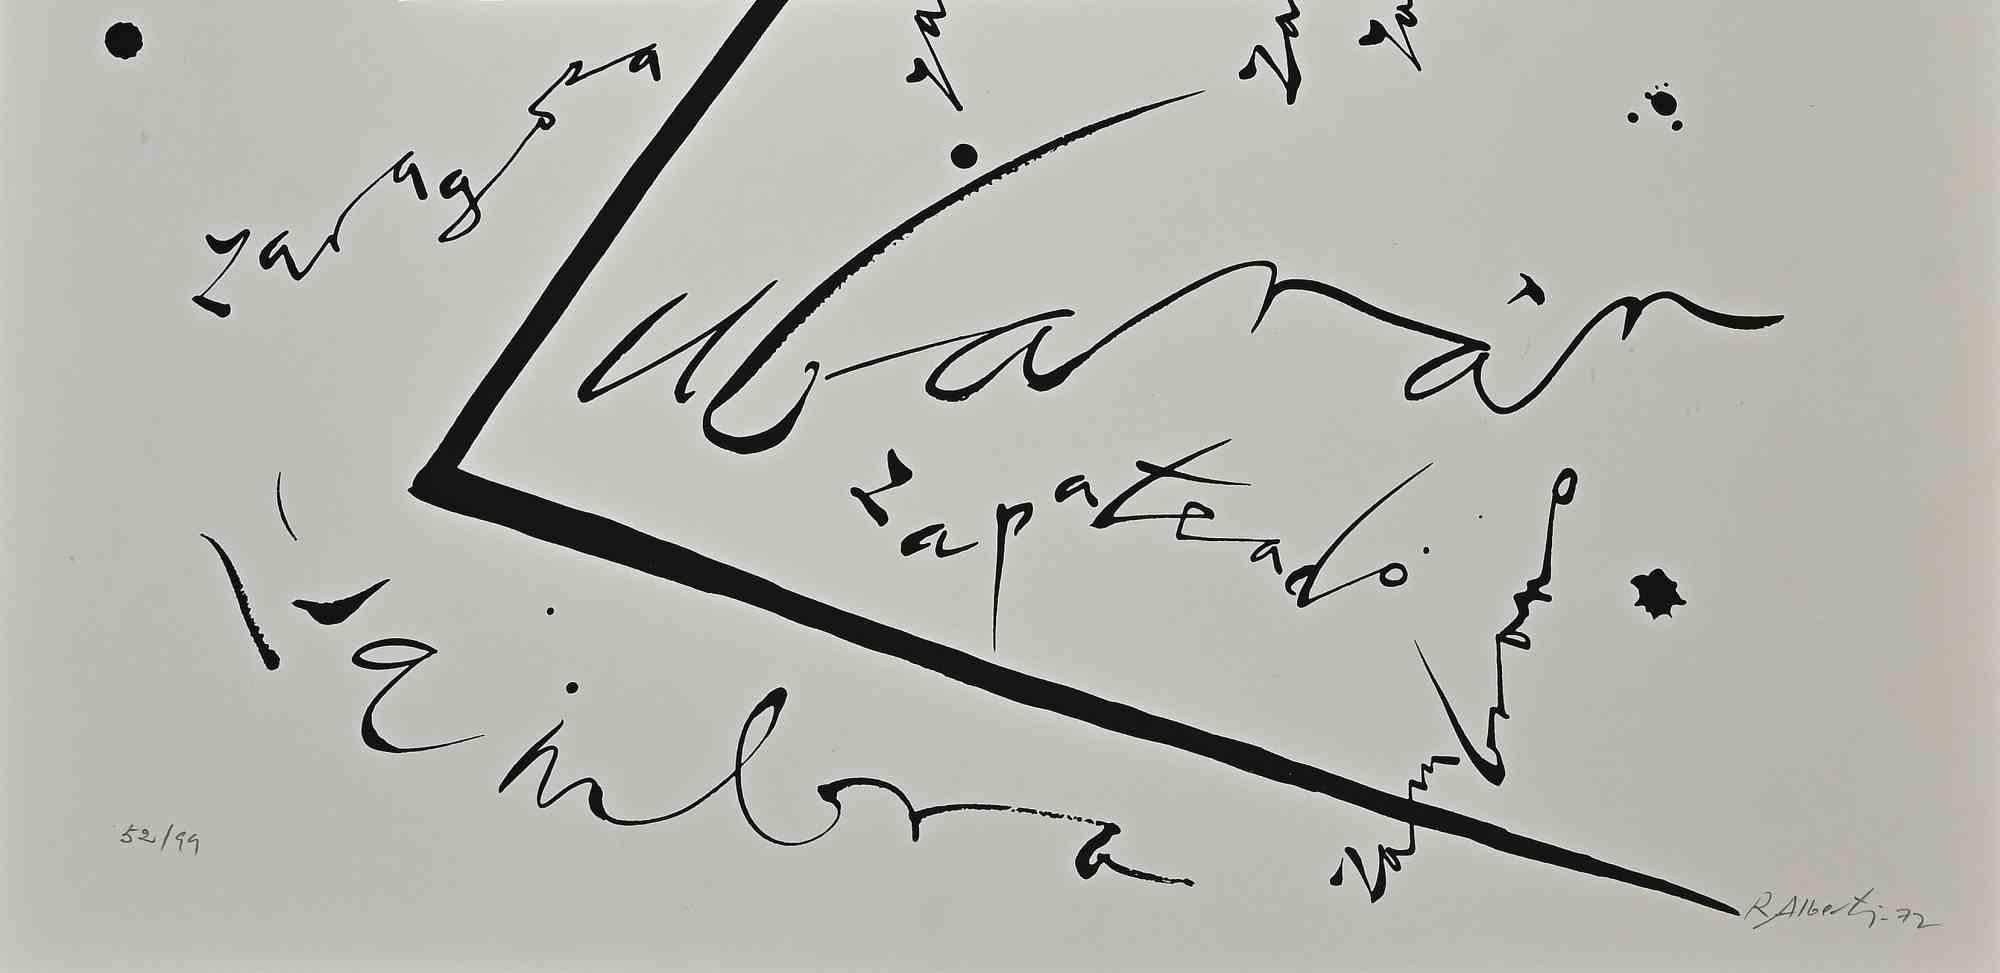 Letter Z - Lithograph by Rafael Alberti - 1972 For Sale 1